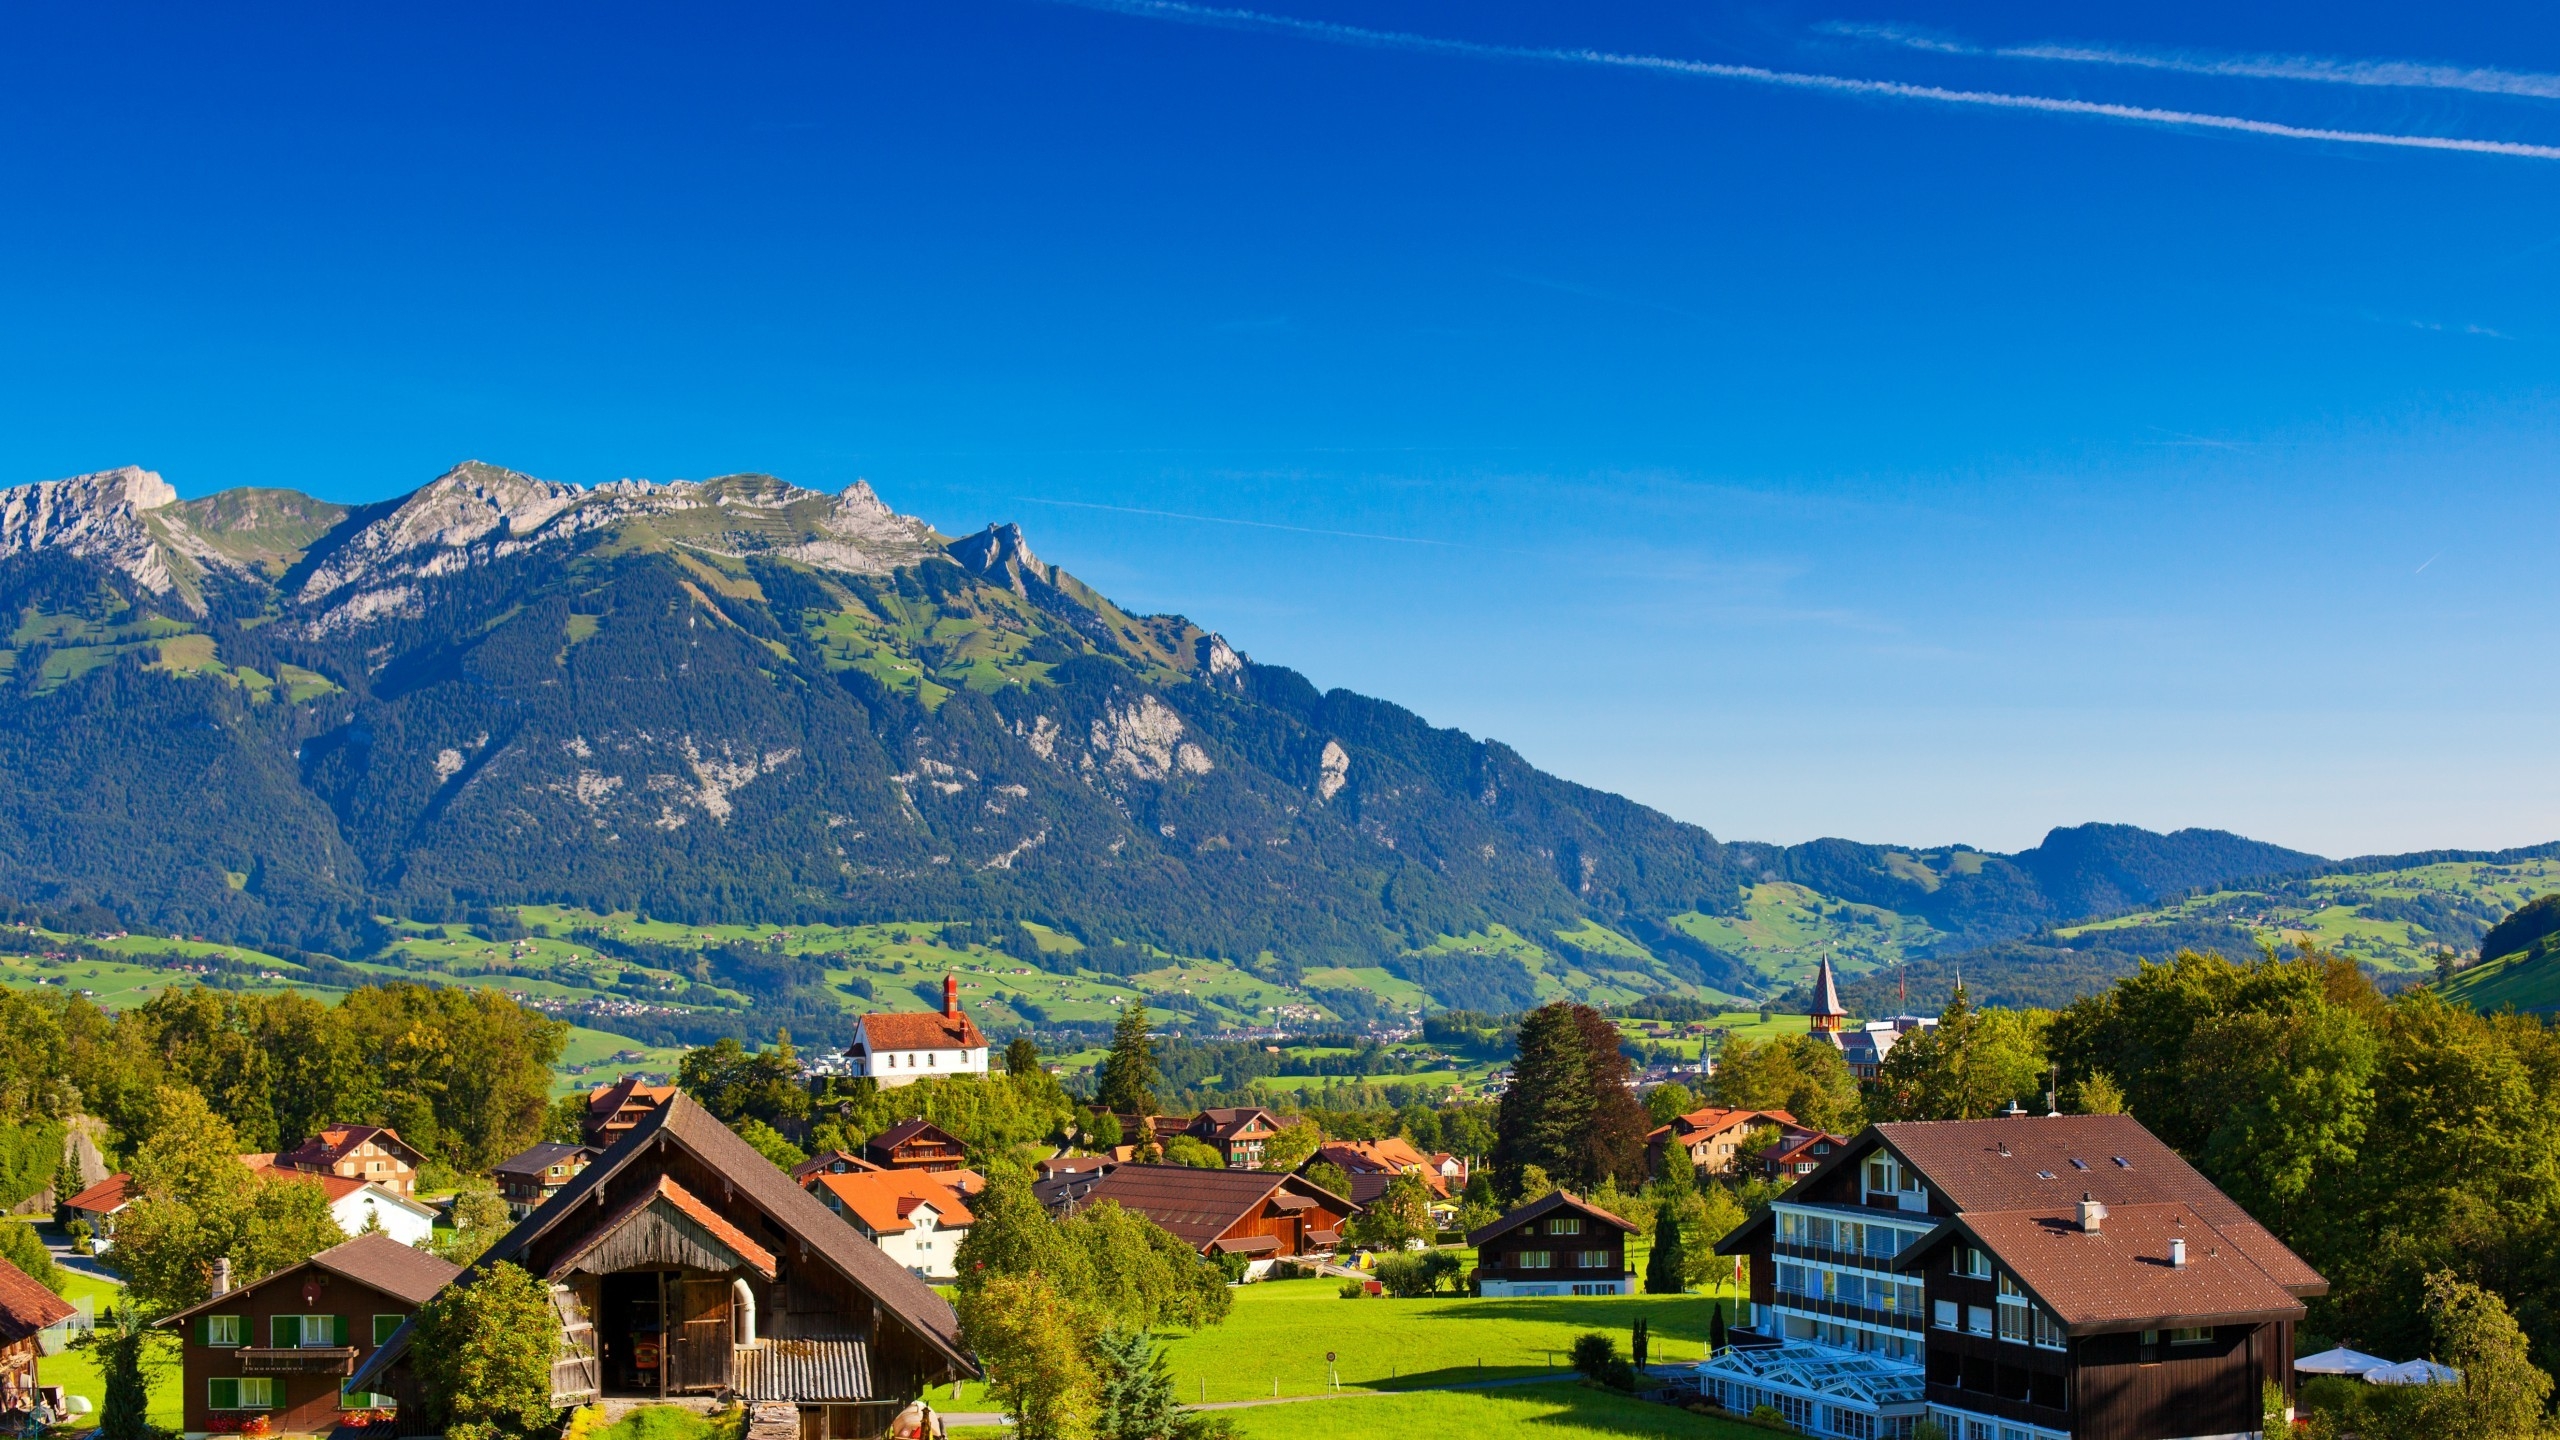 Swiss Alps for 2560x1440 HDTV resolution